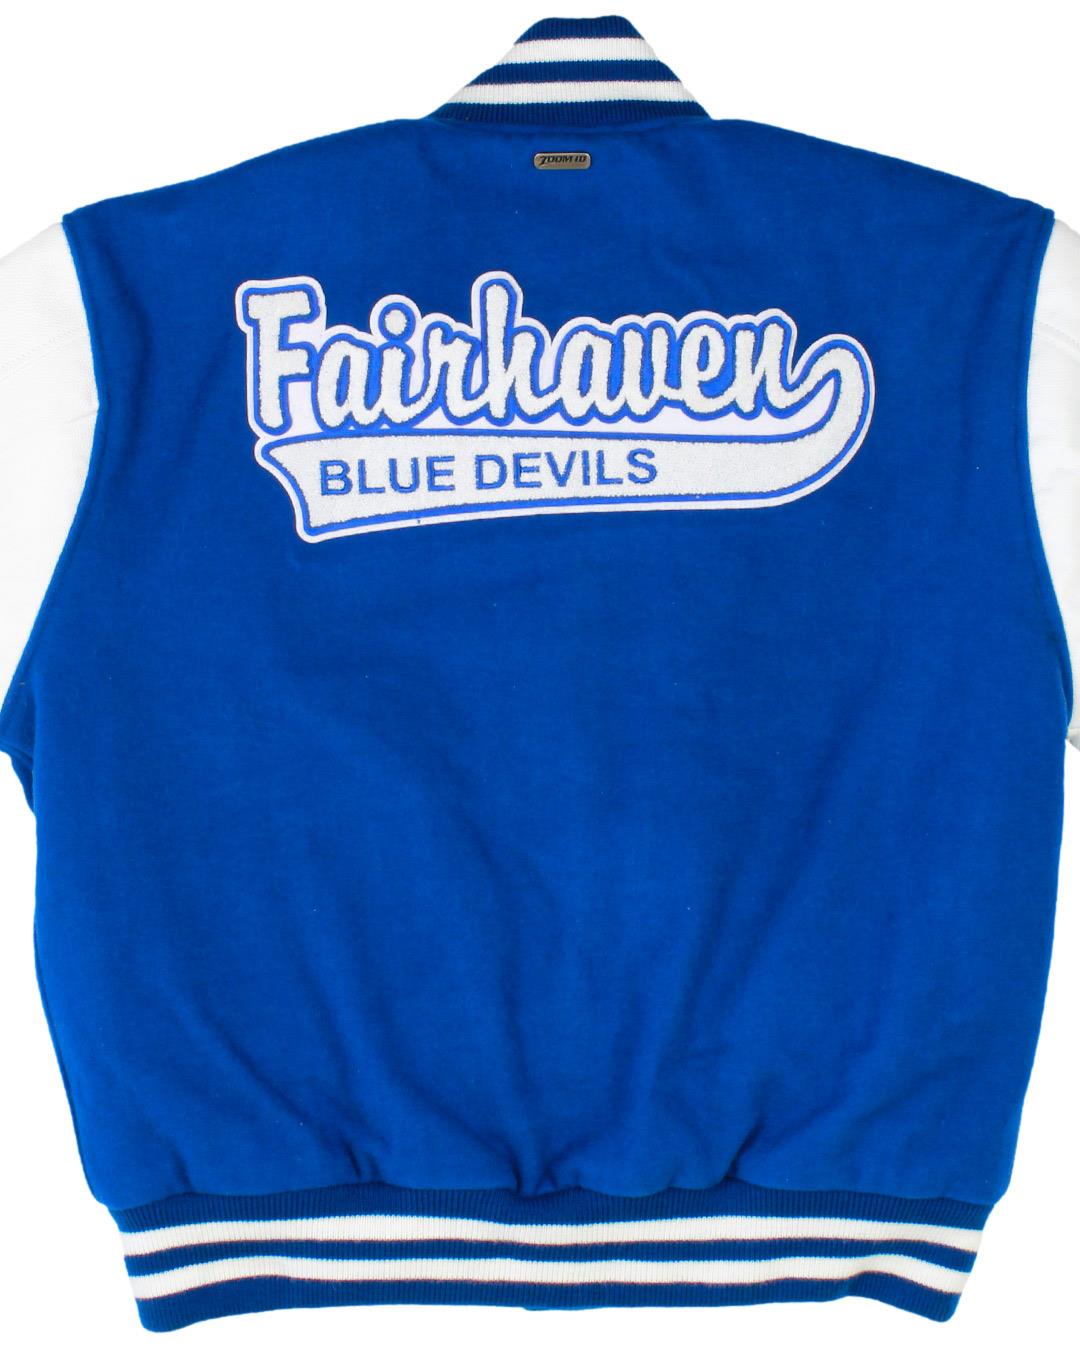 Fairhaven High School Letterman Jacket, Fairhaven MA - Back